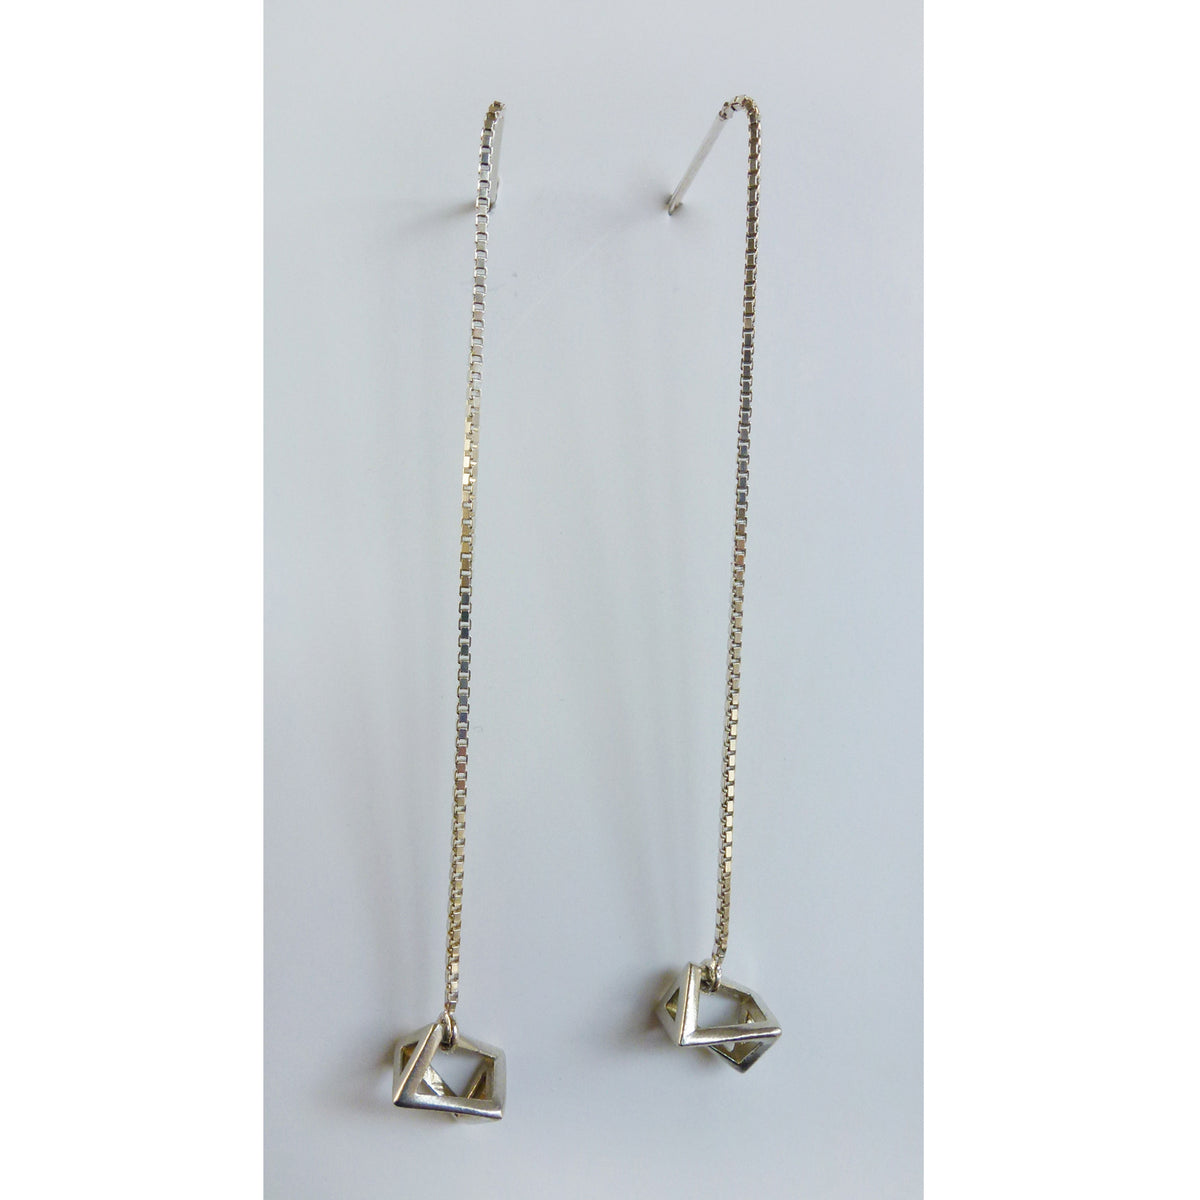 Shawna Tabacznik - Mini Magen Chain Earrings